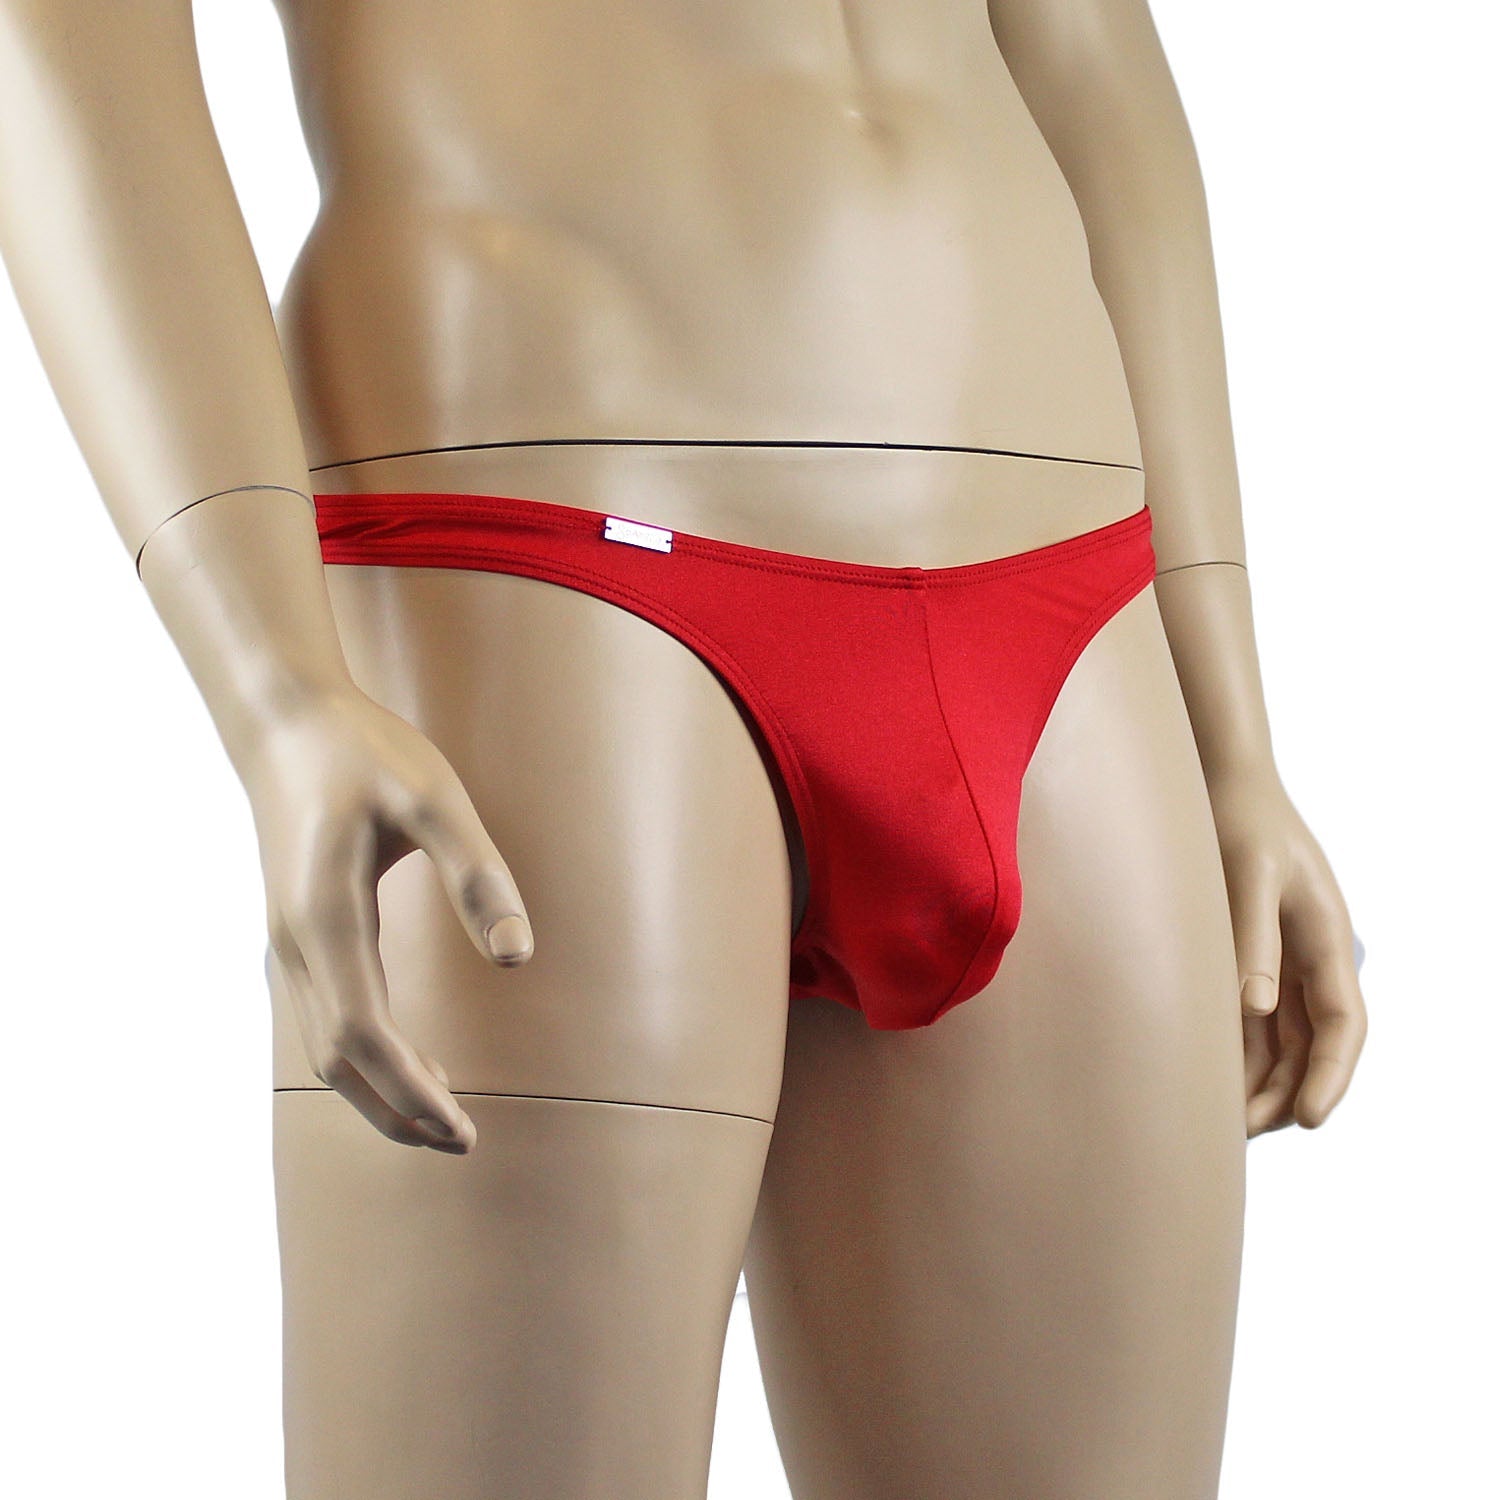 Mens Mick Spandex Medium Rise G string Thong Underwear Lingerie Red